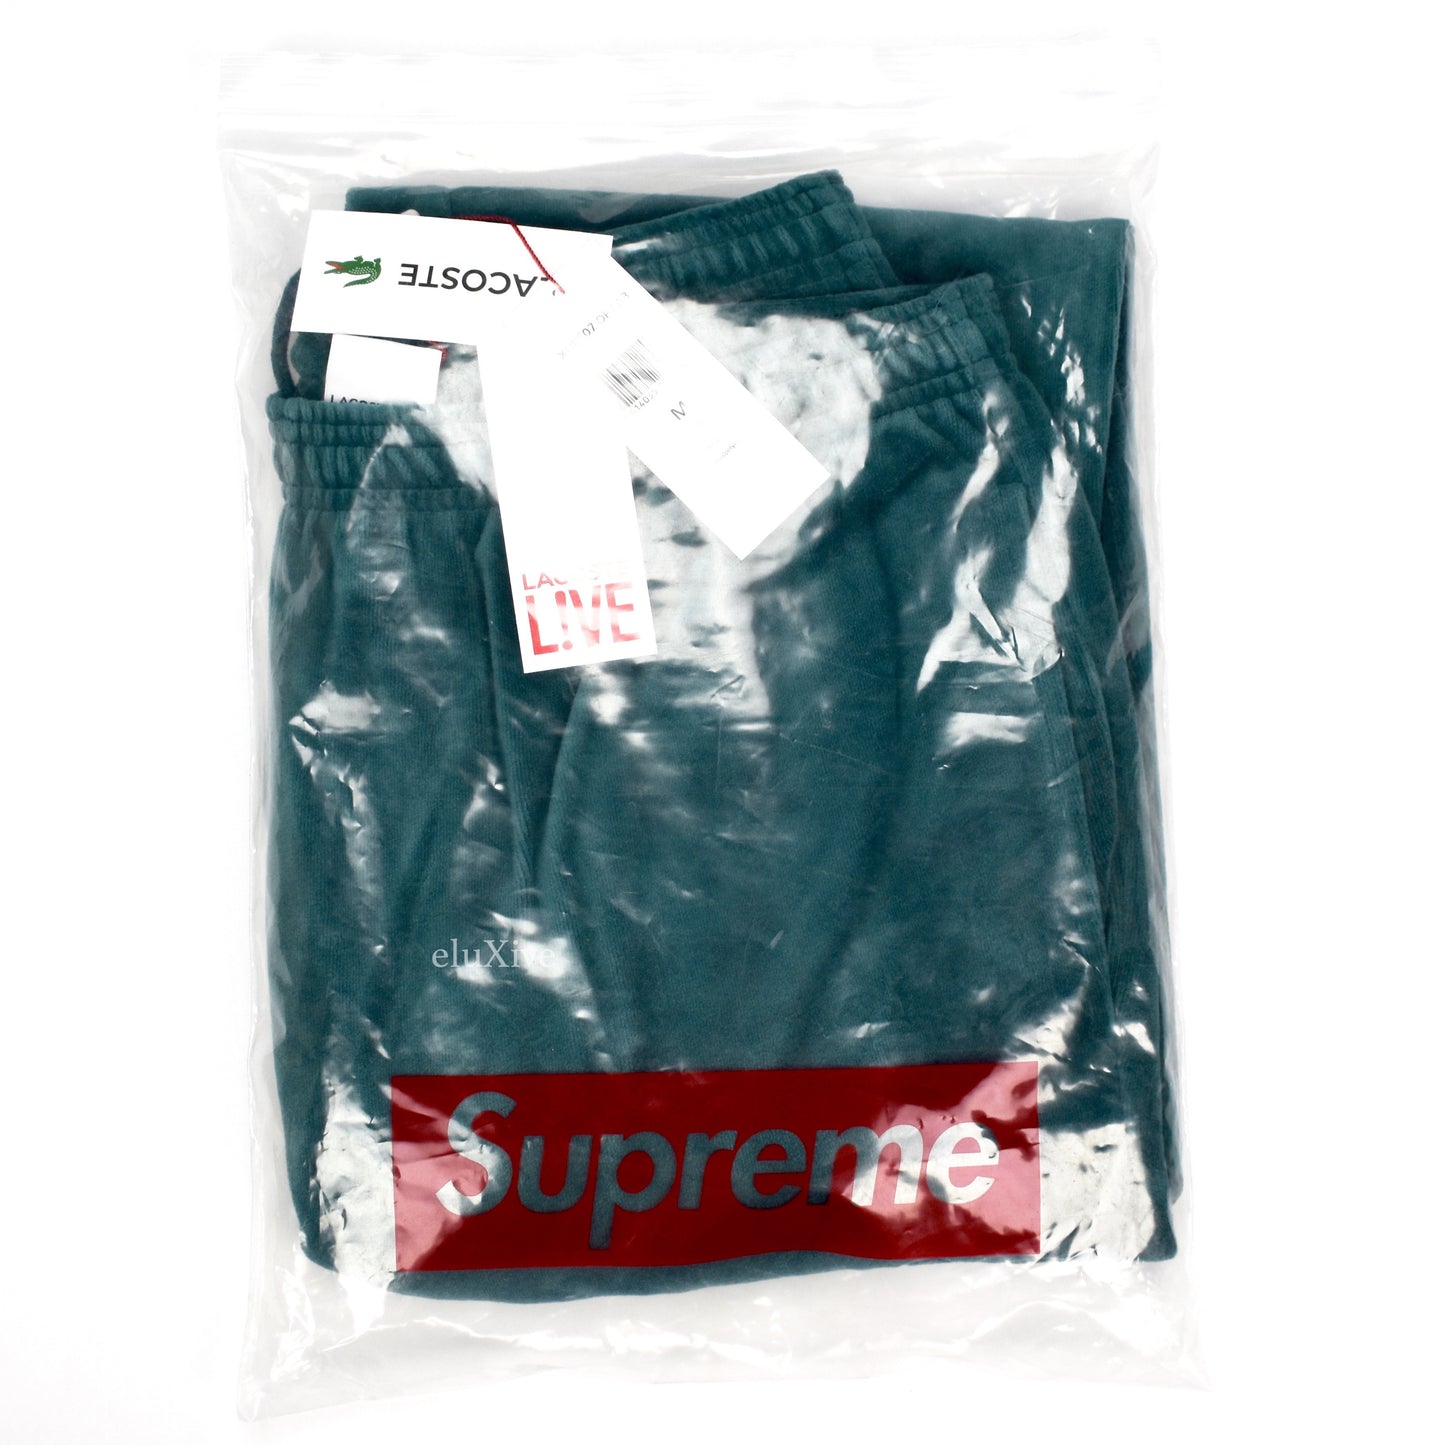 Supreme x Lacoste - Teal Velour Logo Track Pants